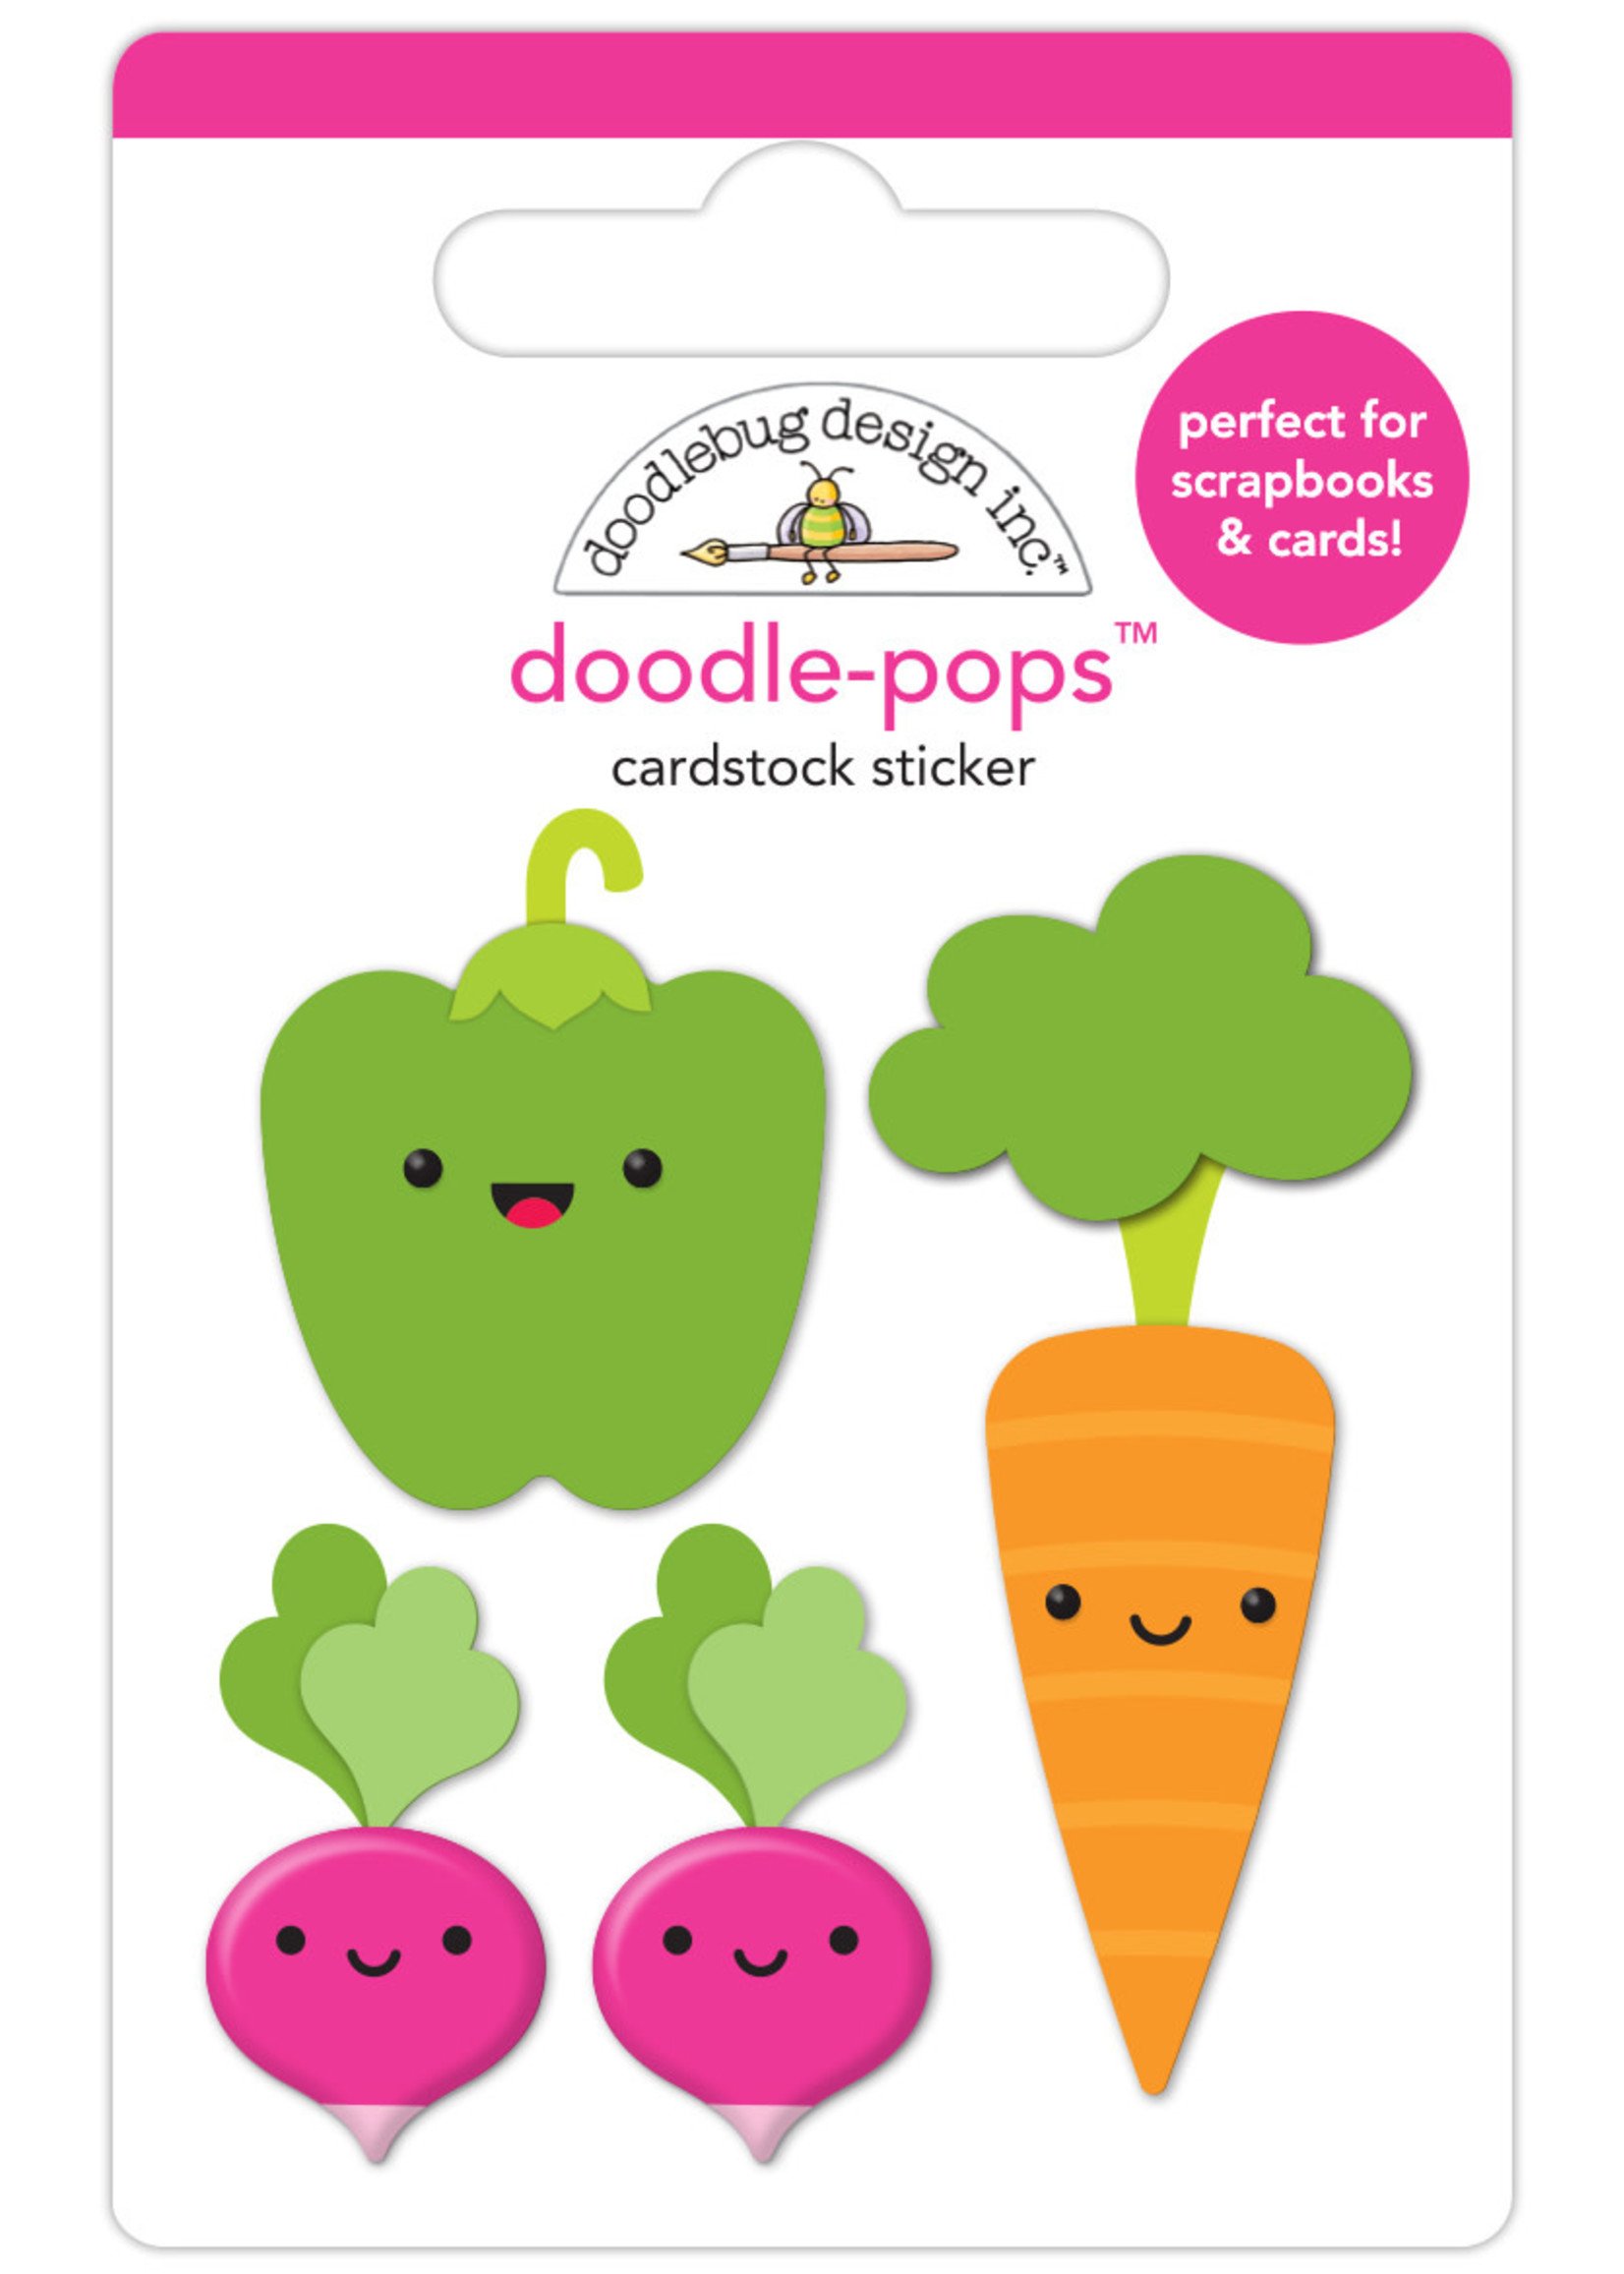 DOODLEBUG farmers market: looking radishing doodle-pops